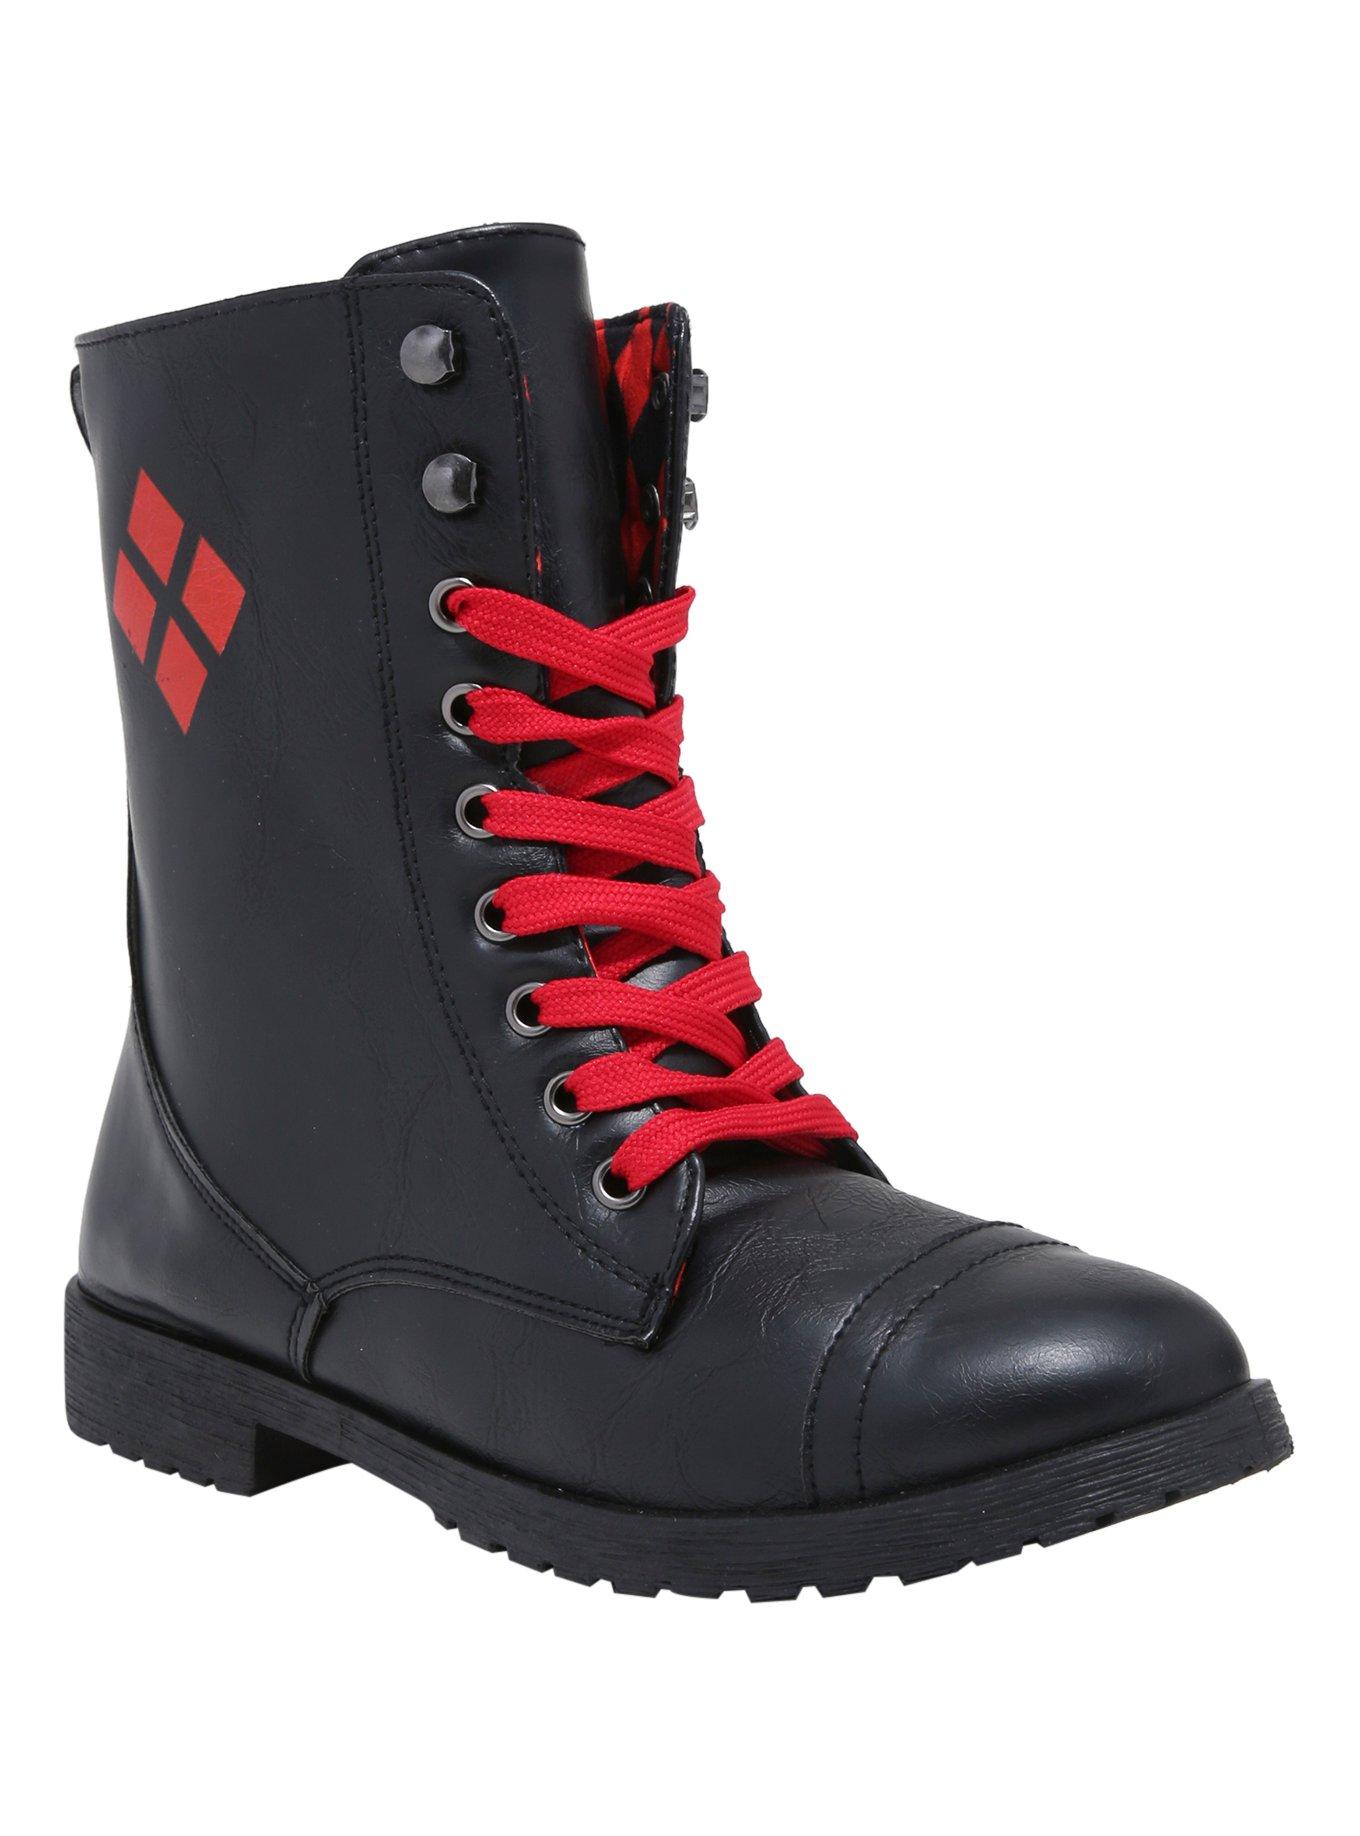 Harley quinn combat boots